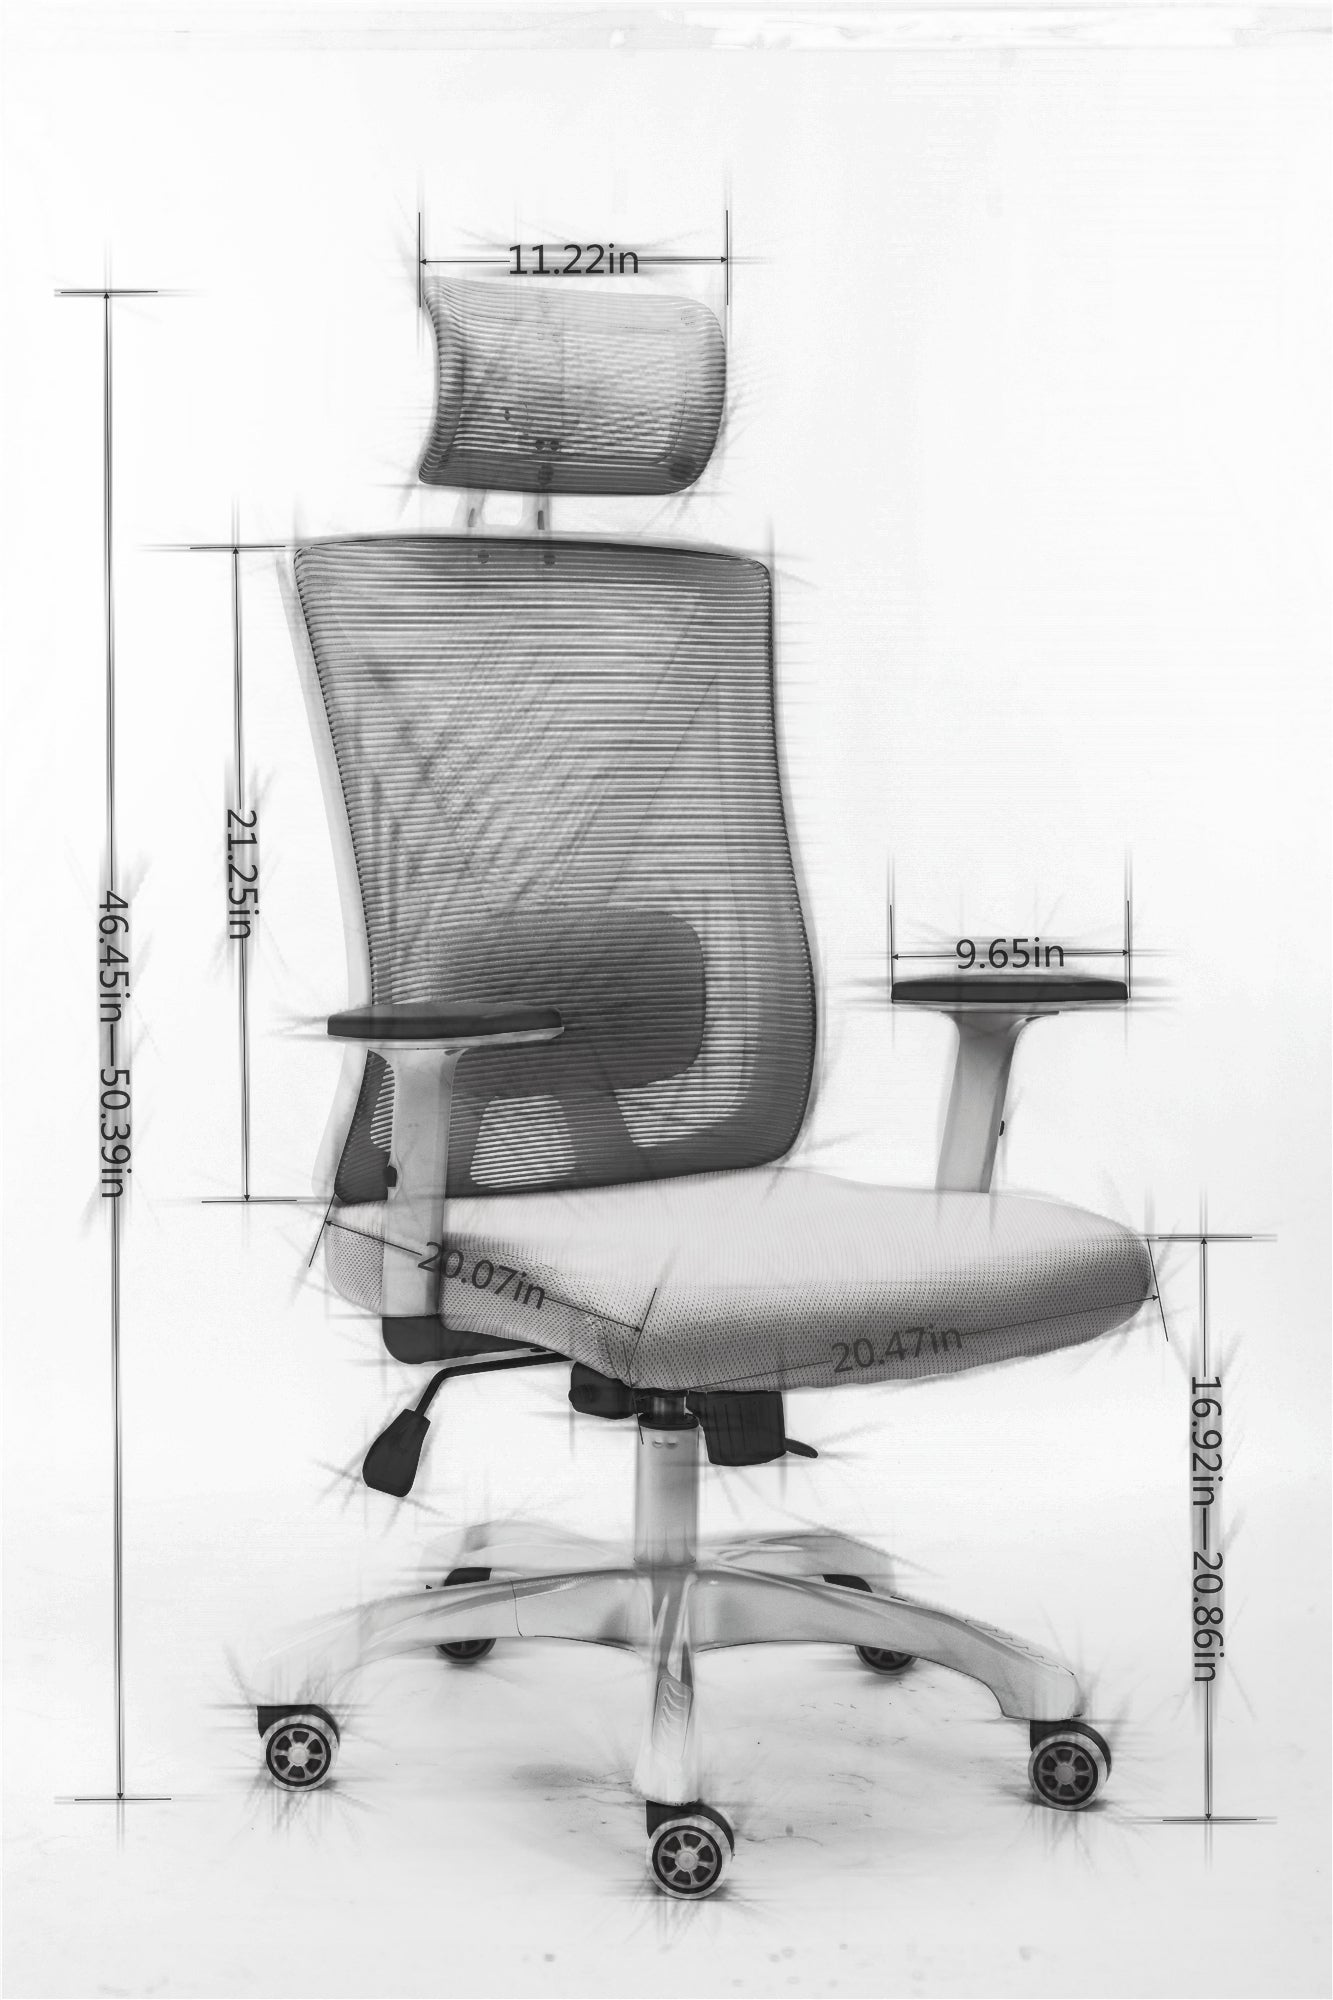 Ergonomic Mesh Chair w/ Headrest Pink